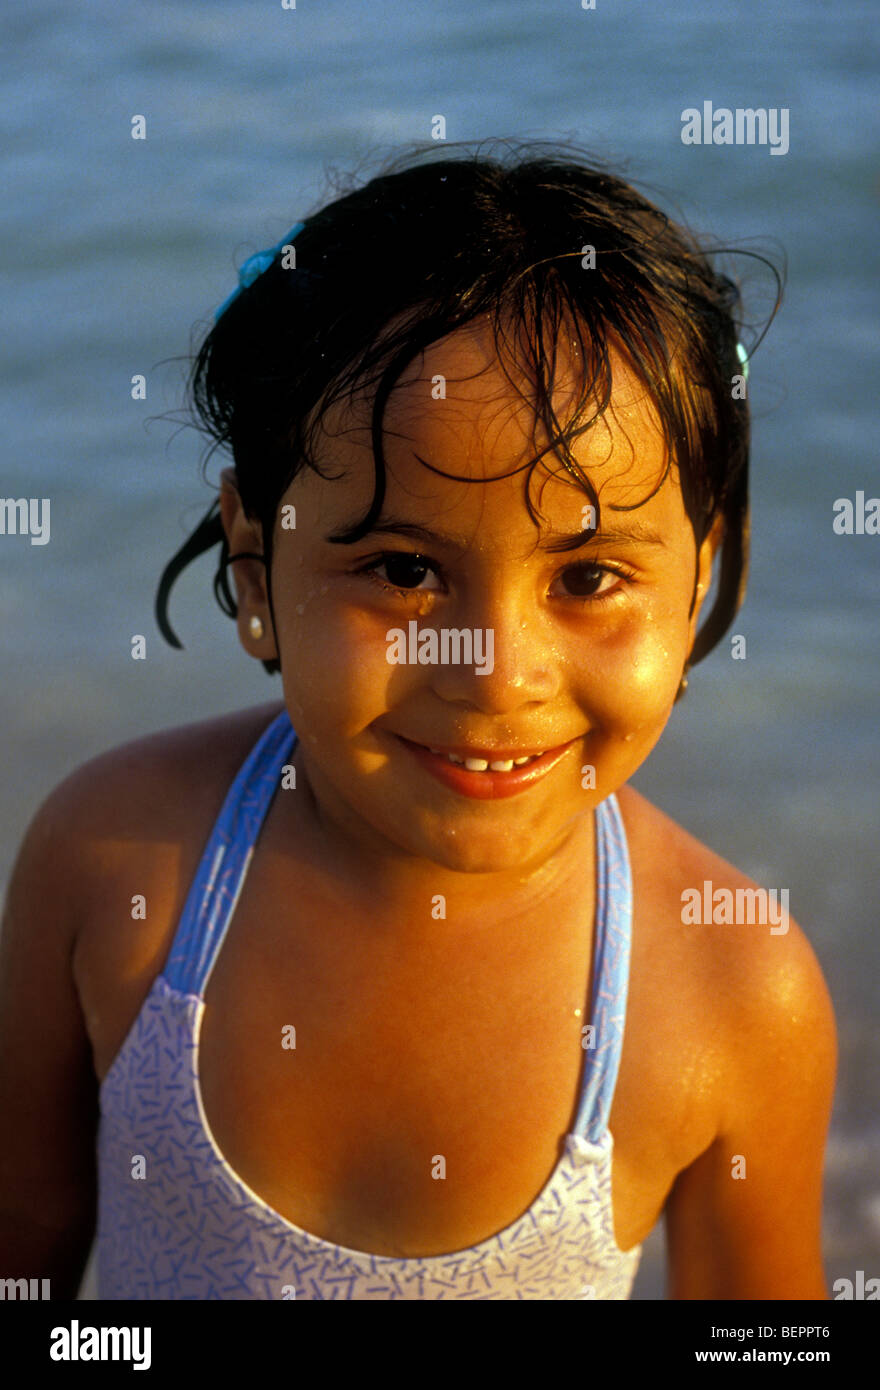 1, one, Mexican girl, Mexican, girl, young girl, girl, child, face, eye contact, front view, Akumal, Quintana Roo State, Yucatan Peninsula, Mexico Stock Photo